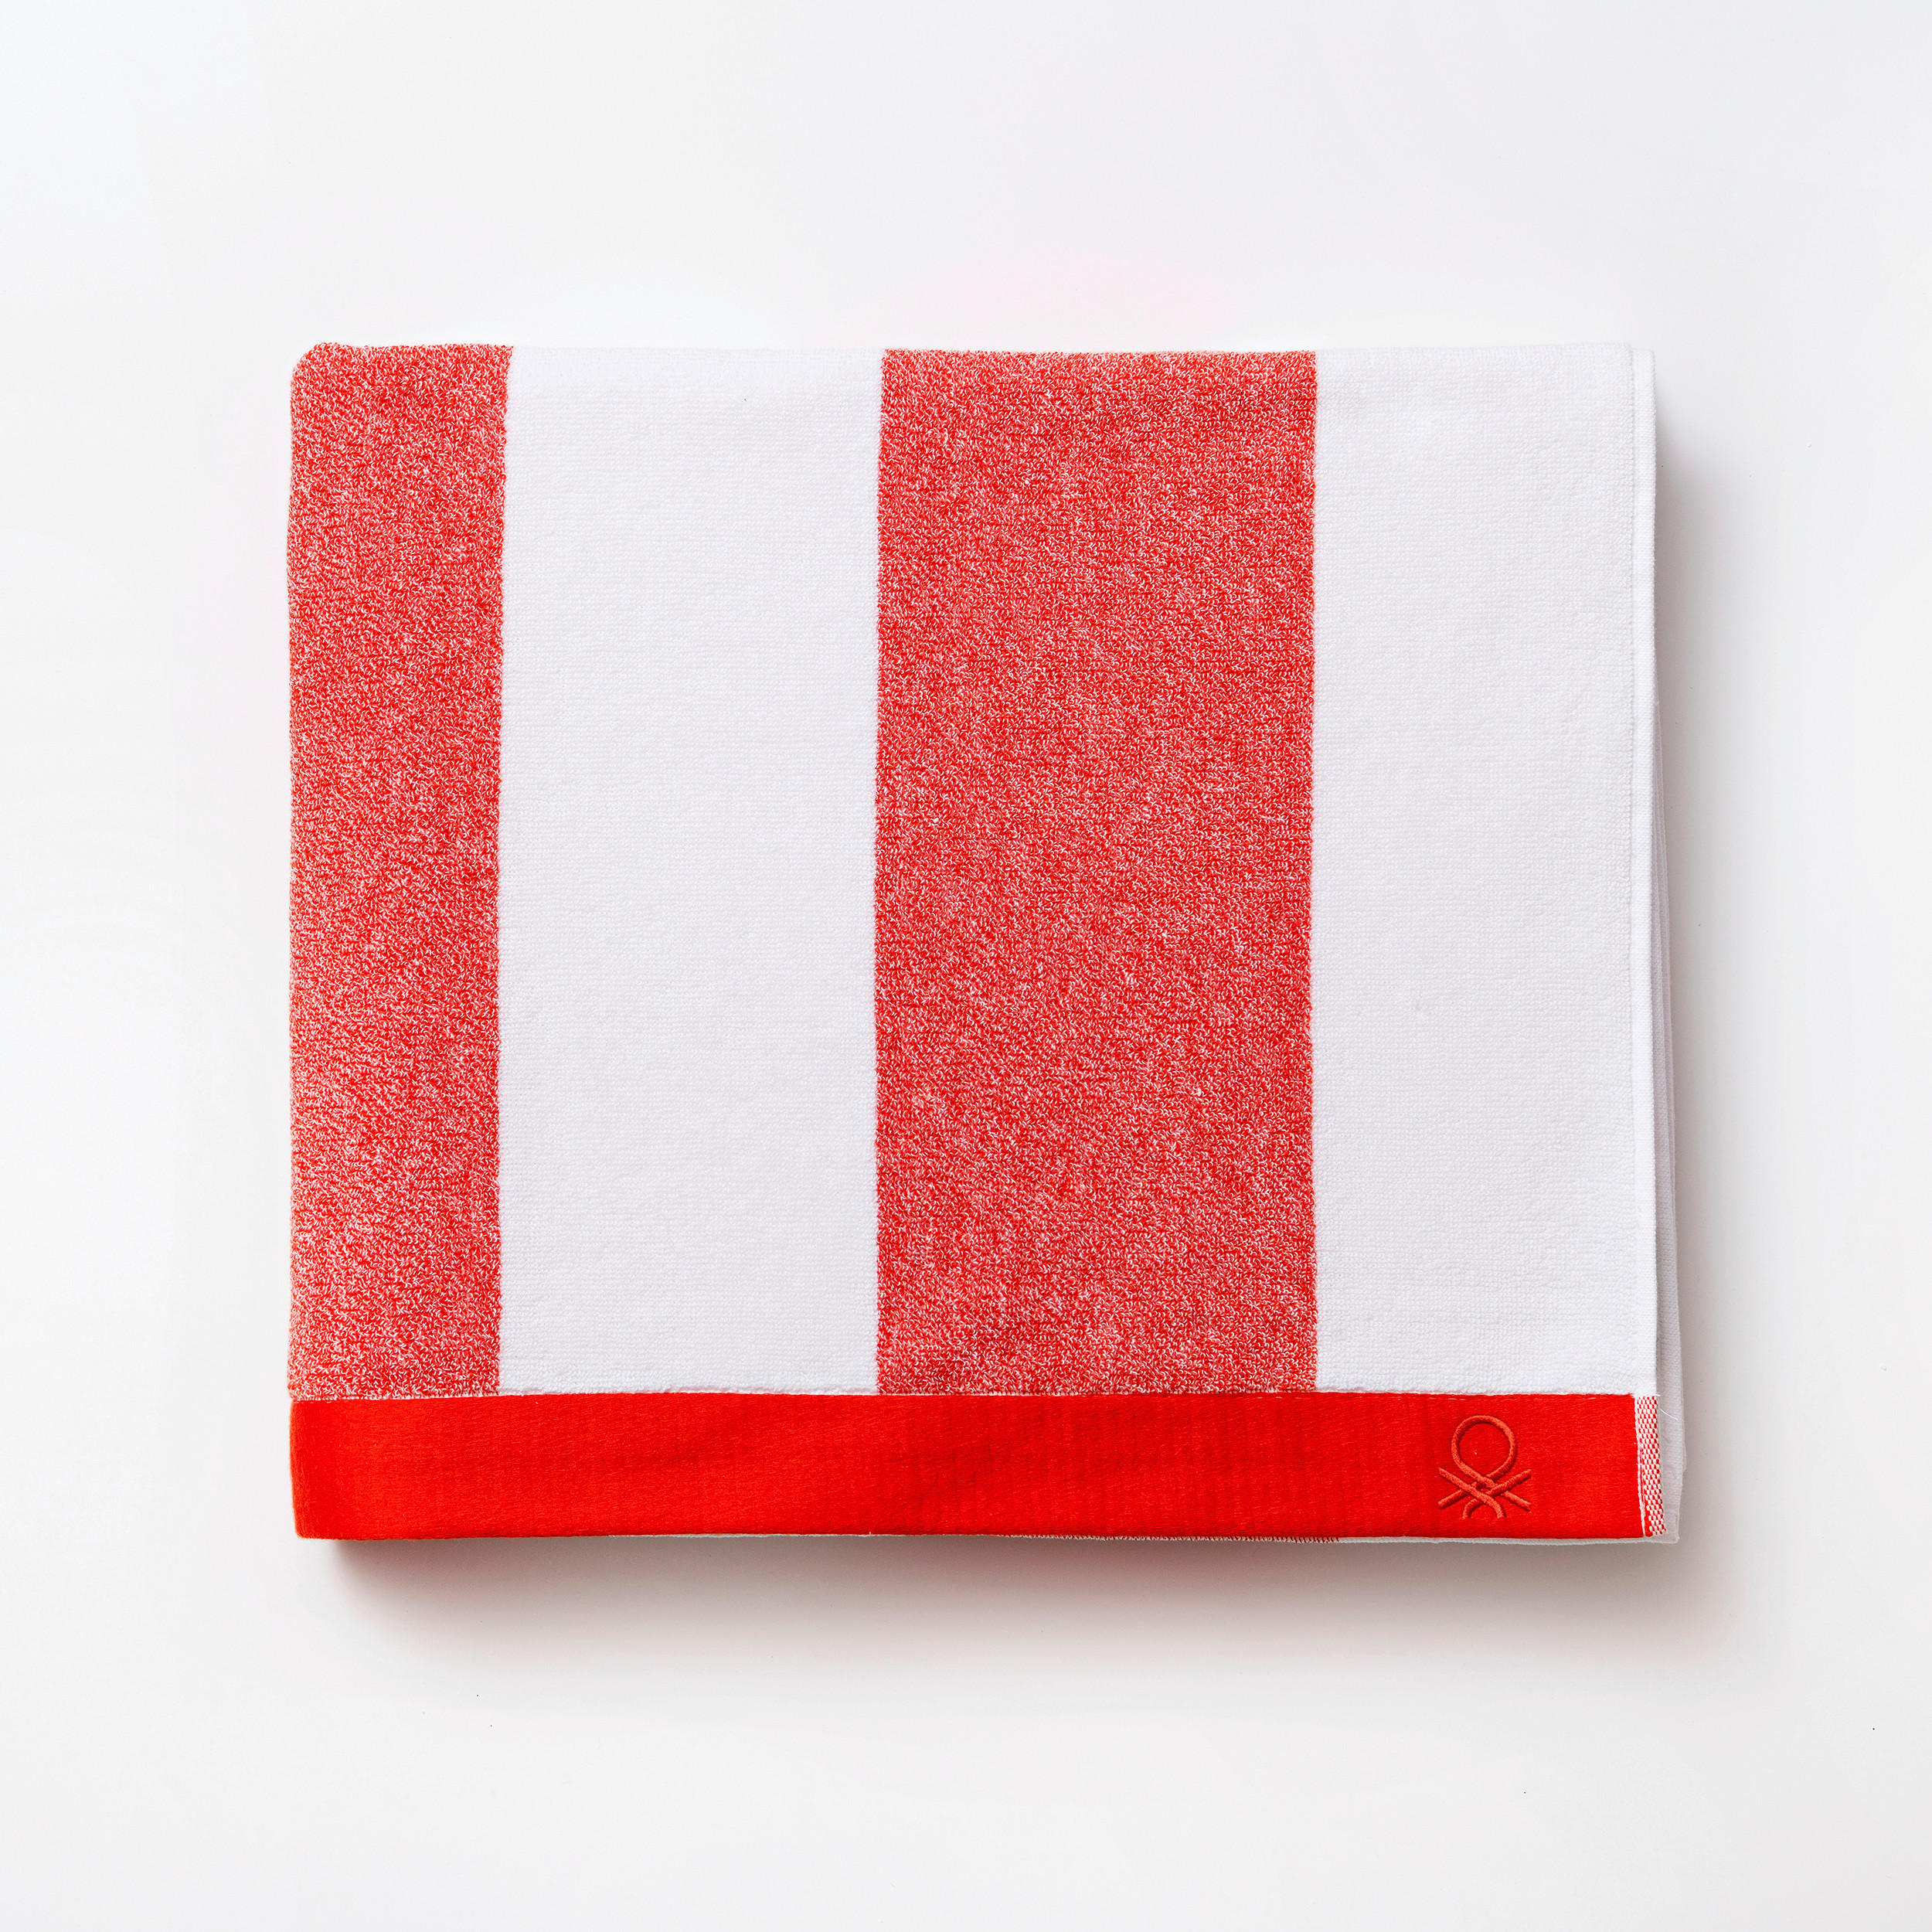 STRANDTUCH BENETTON ROT  - Rot/Weiß, Basics, Textil (45/35/4cm) - Benetton